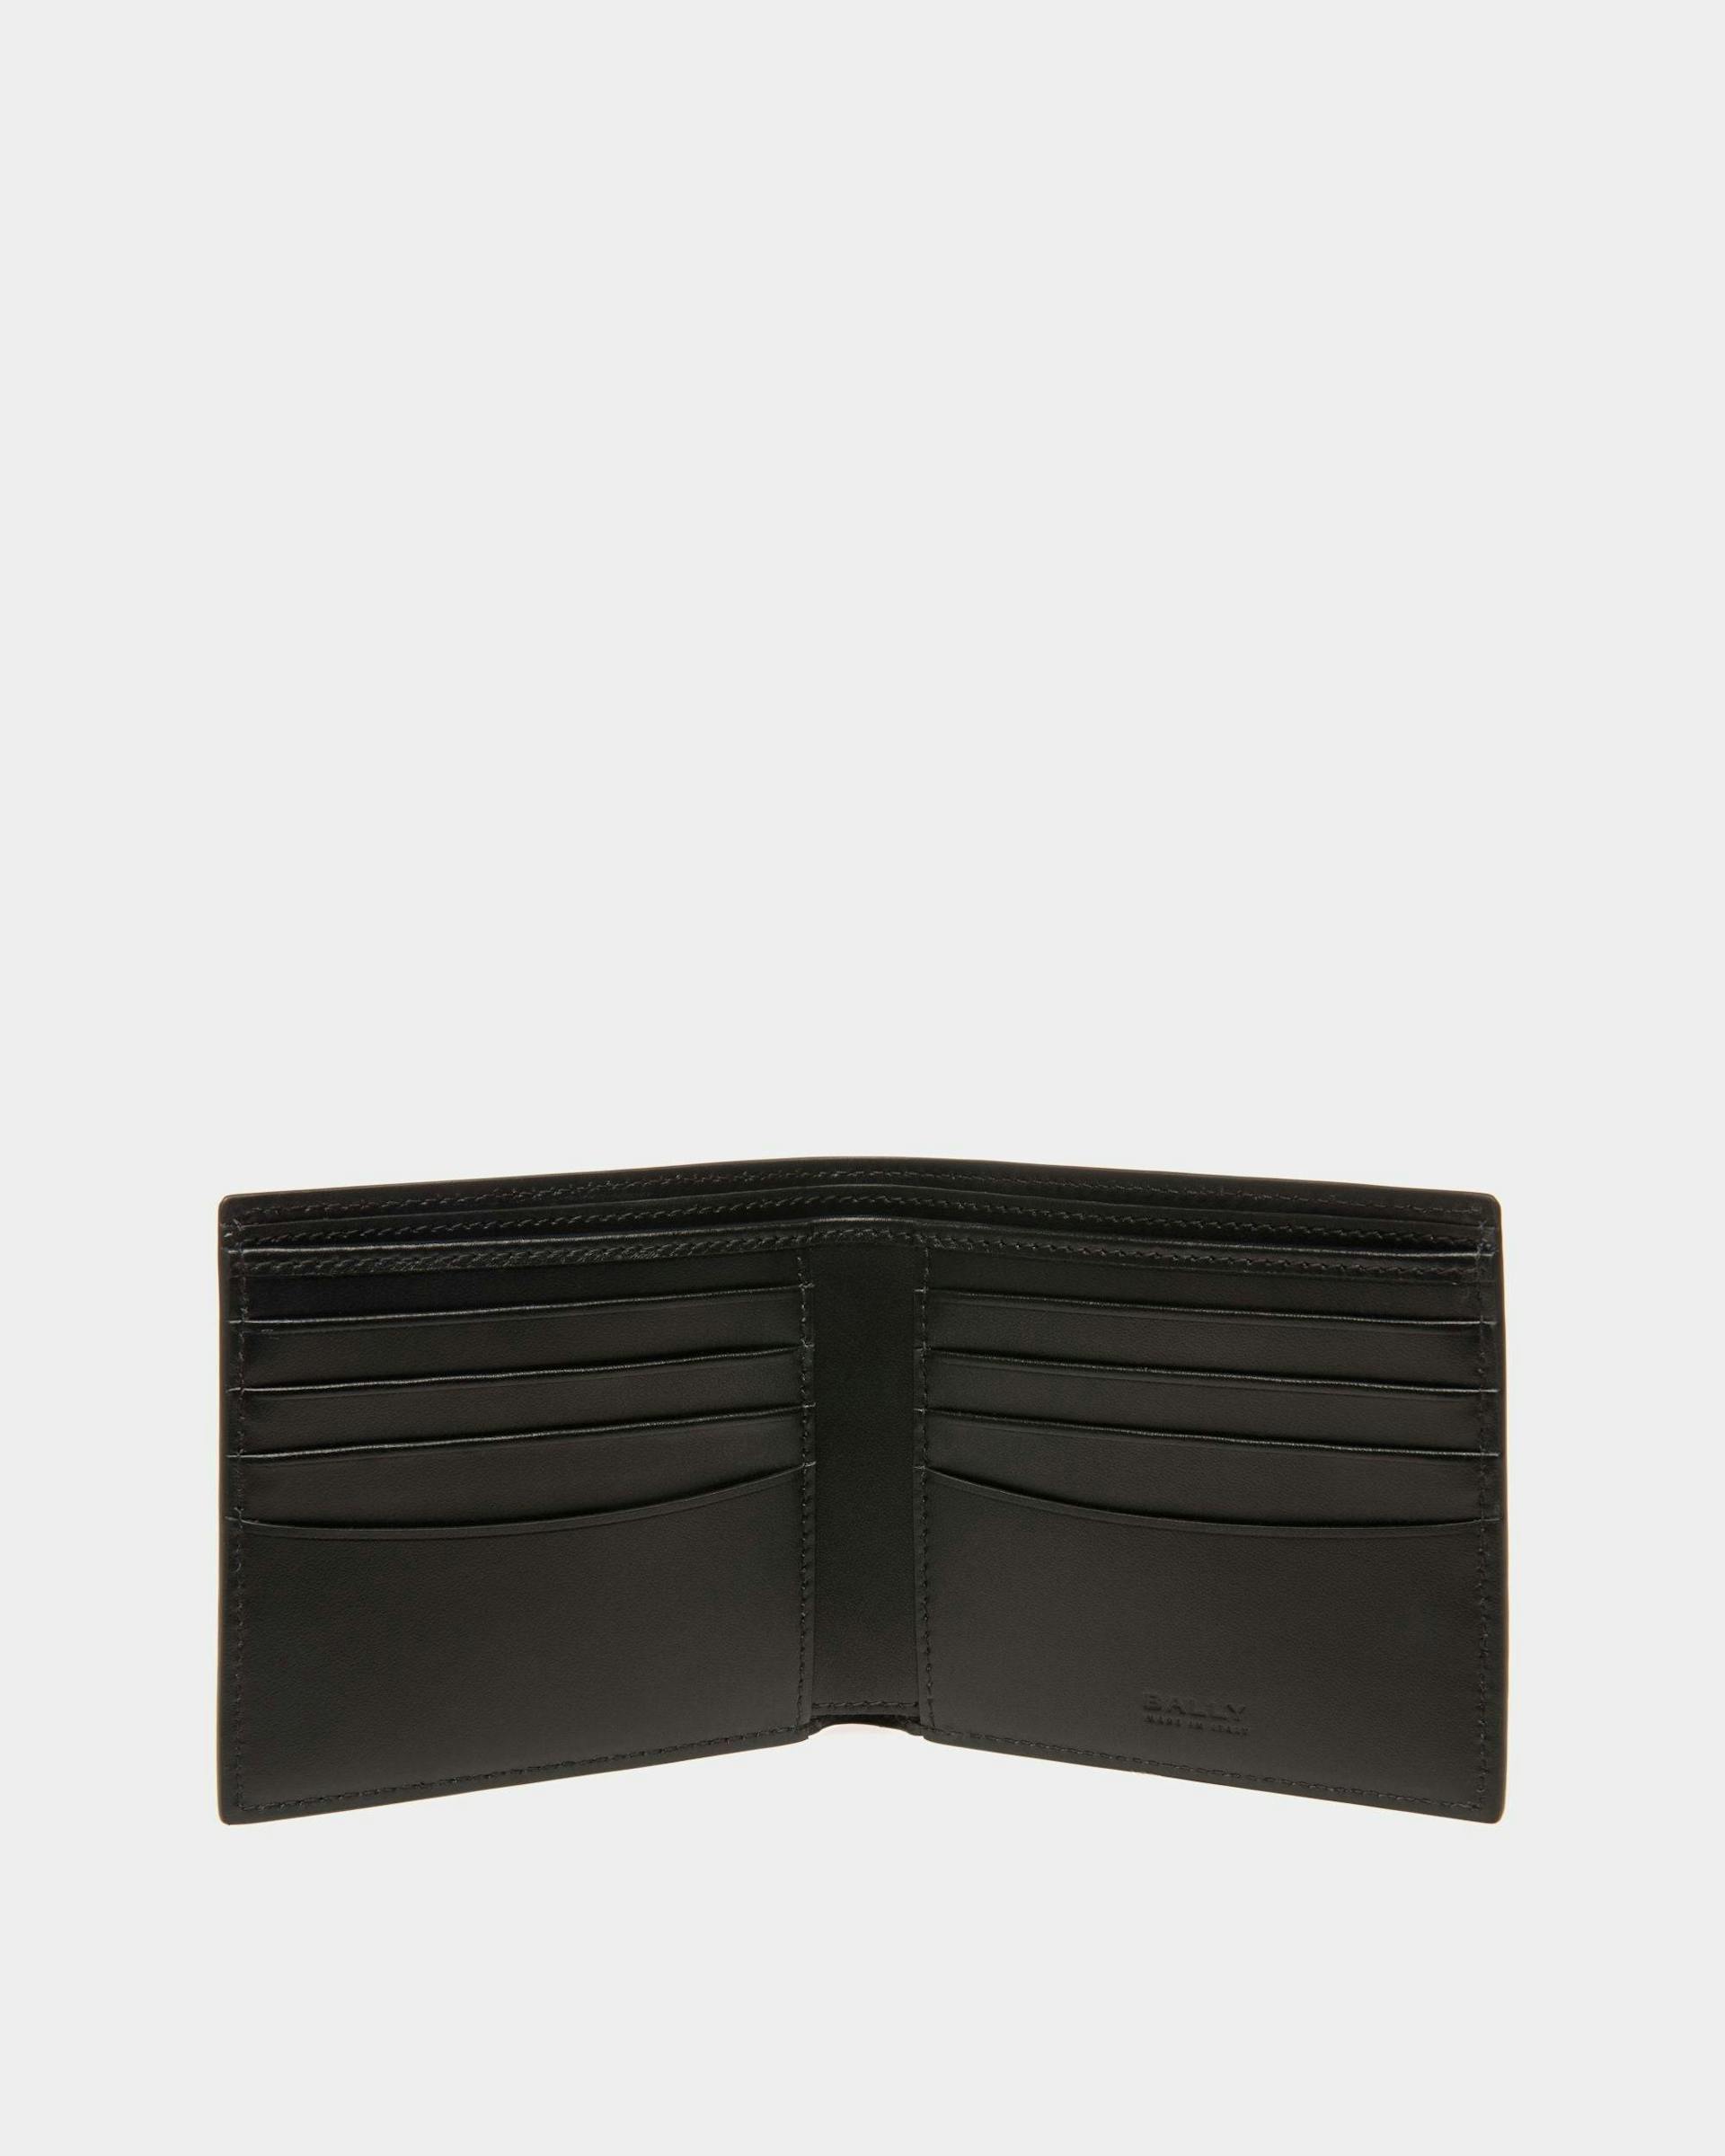 Men's Banque Wallet In Black Leather | Bally | Still Life Open / Inside